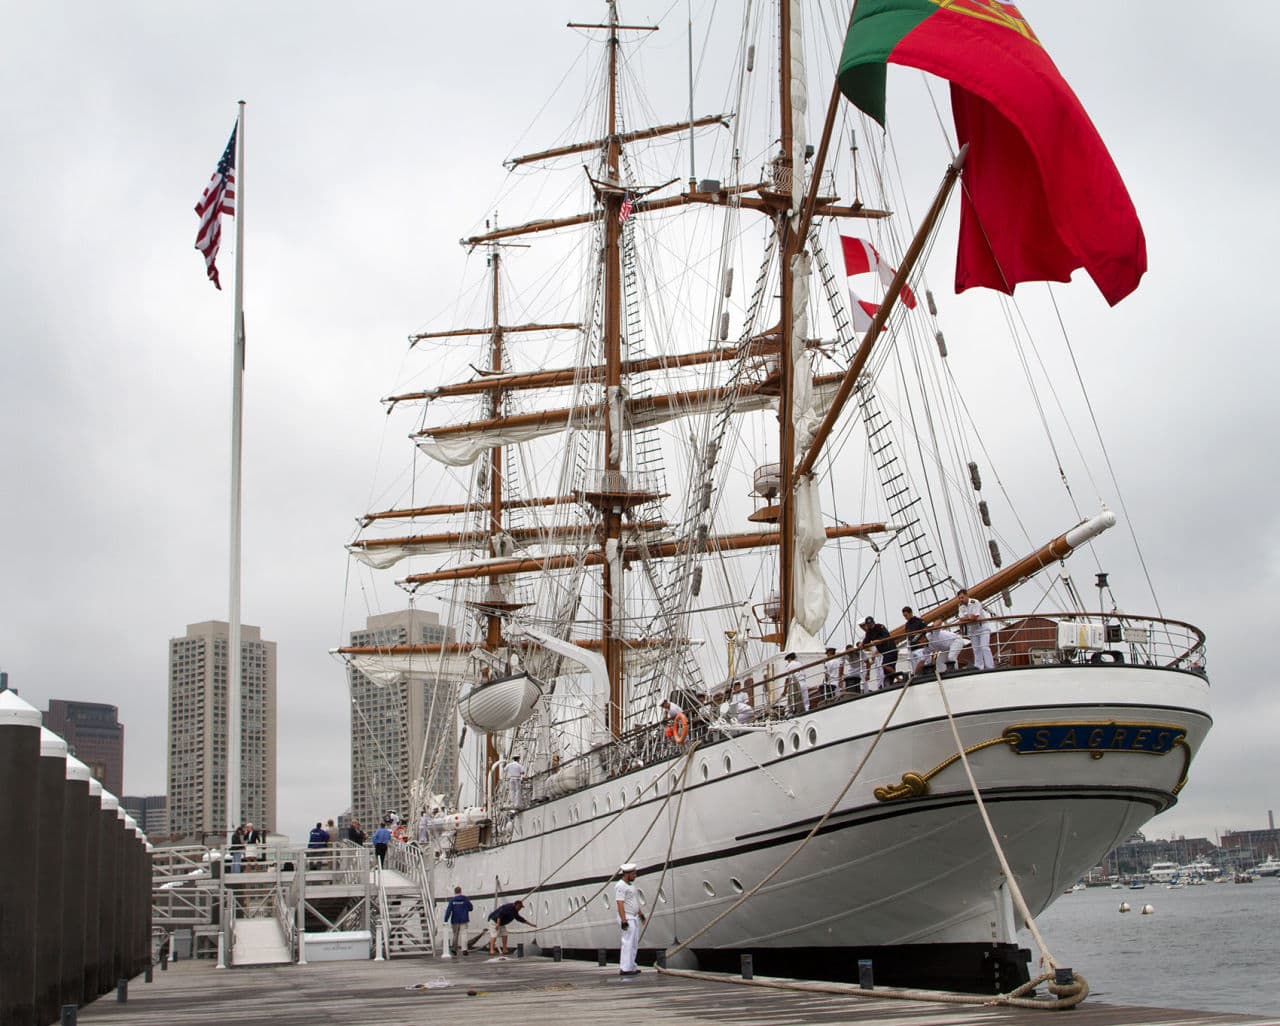 Portugal's Sagres docked at the Fan Pier Marina in Boston in 2015. (Hadley Green for WBUR)